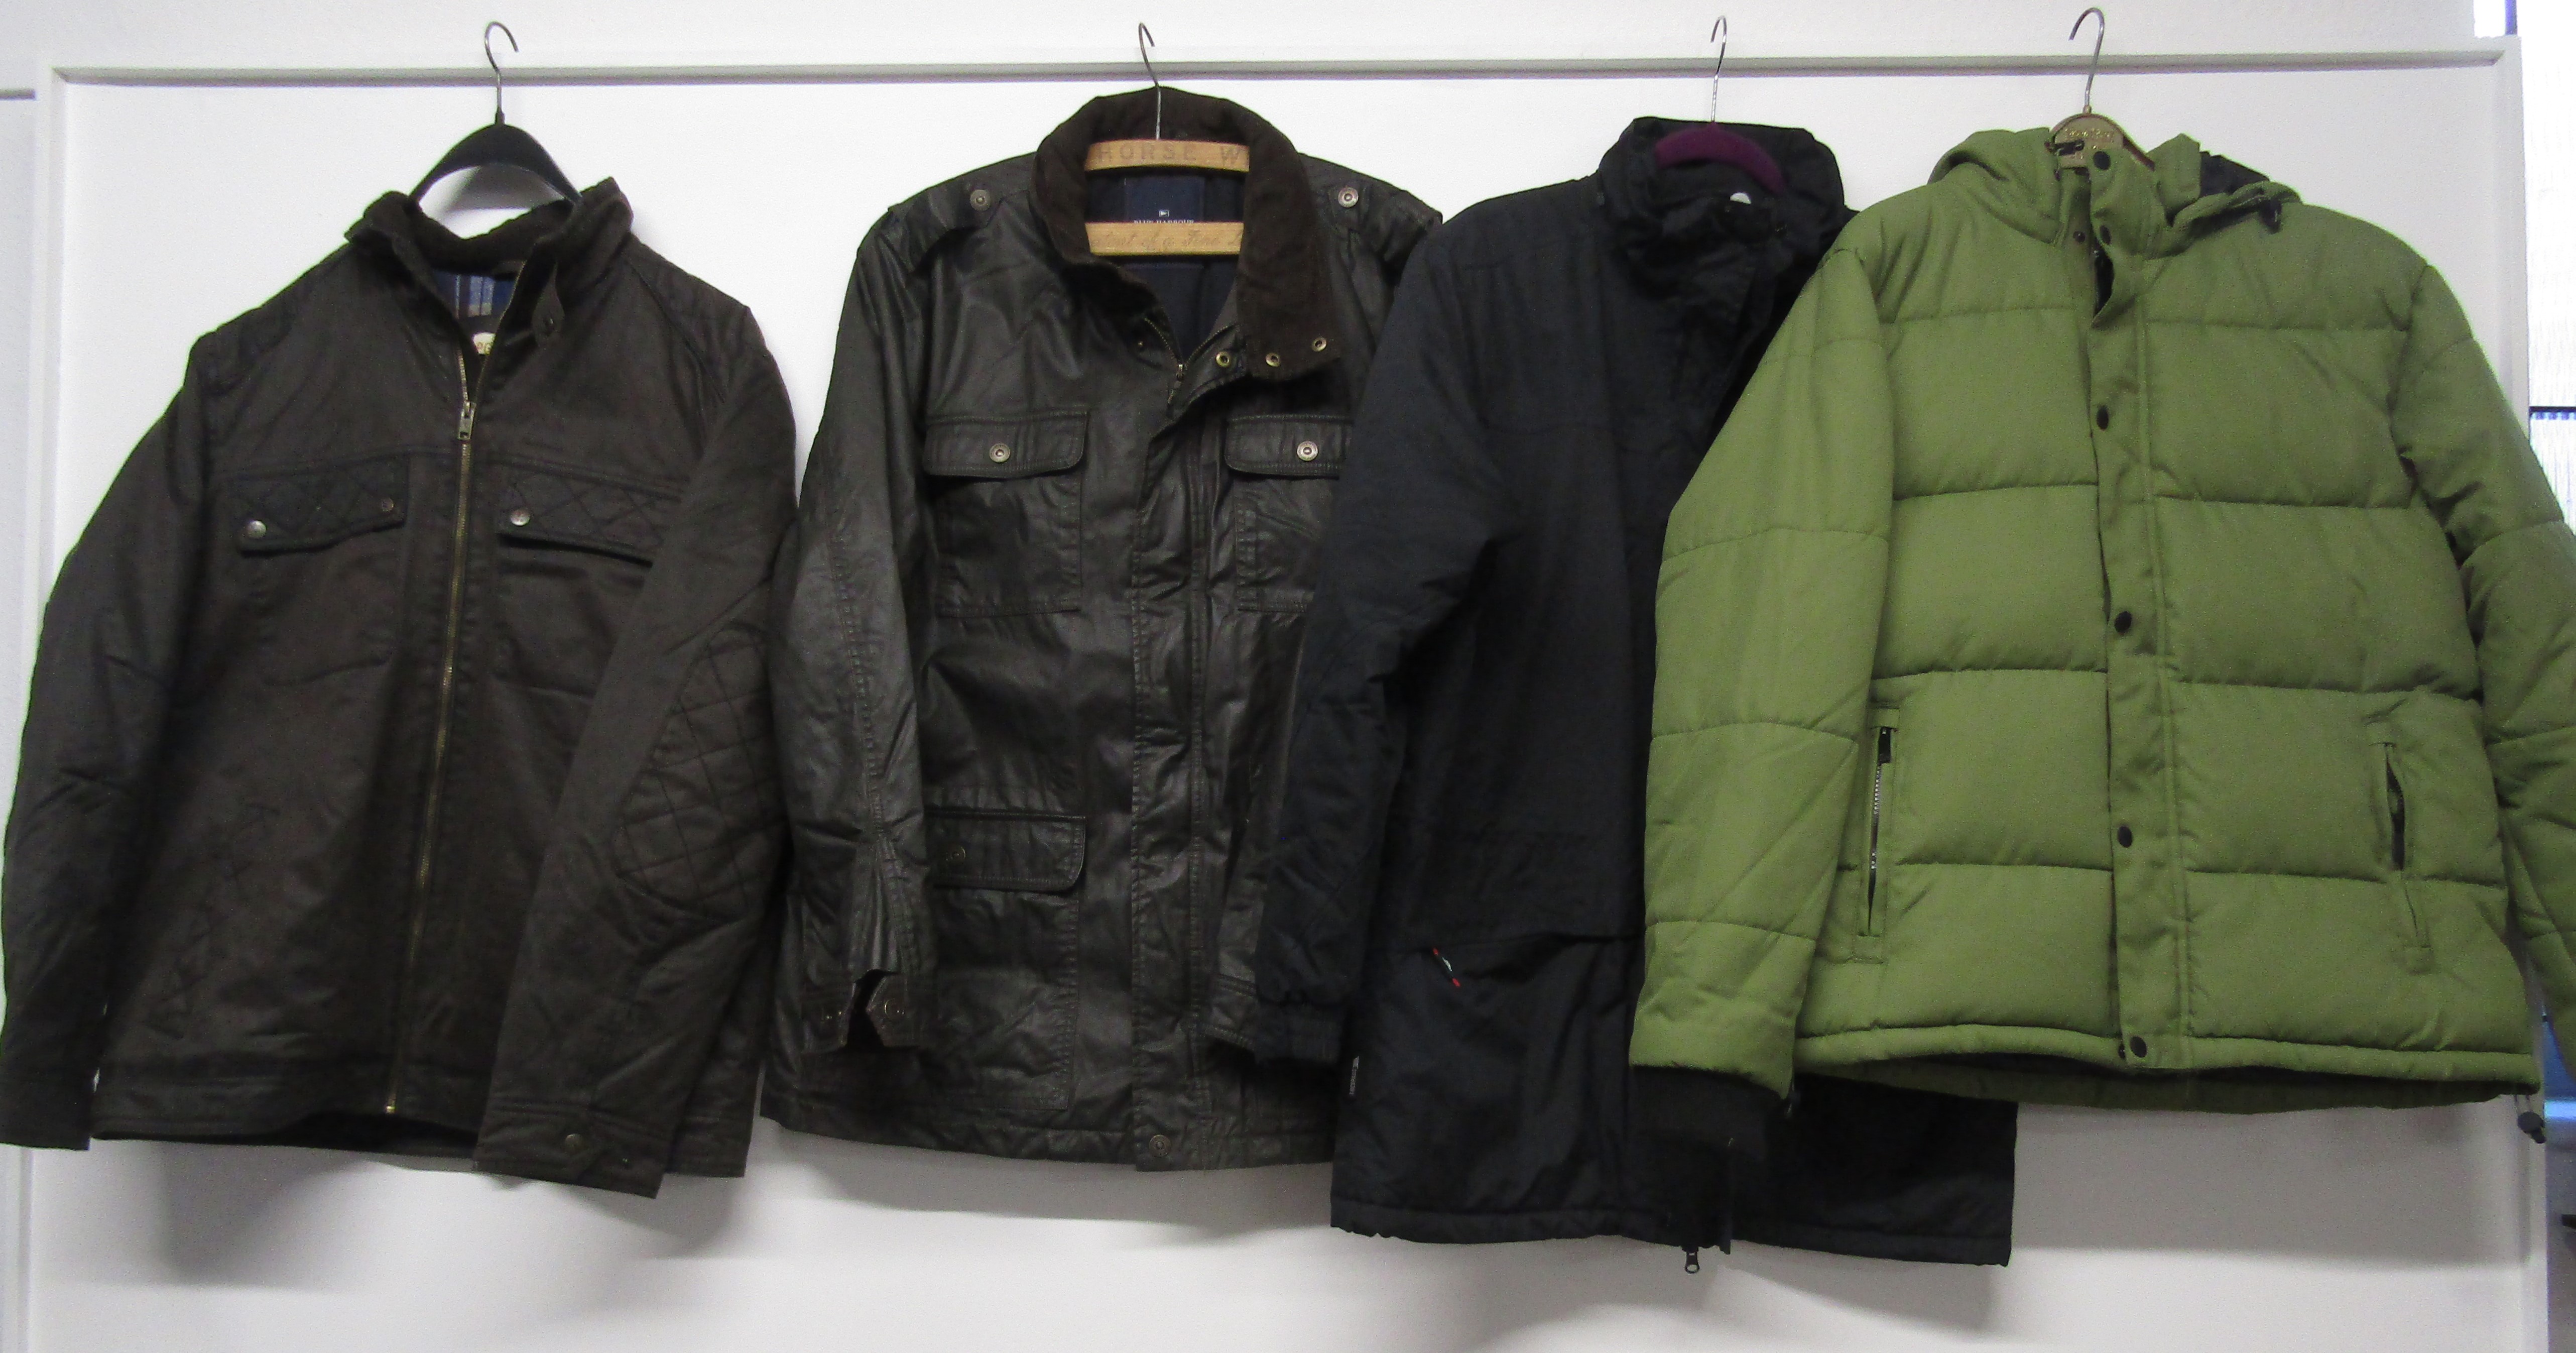 4 men's jackets PG Field heritage (L), M&S Blue Harbour, Trespass (M) and Regatta (M)